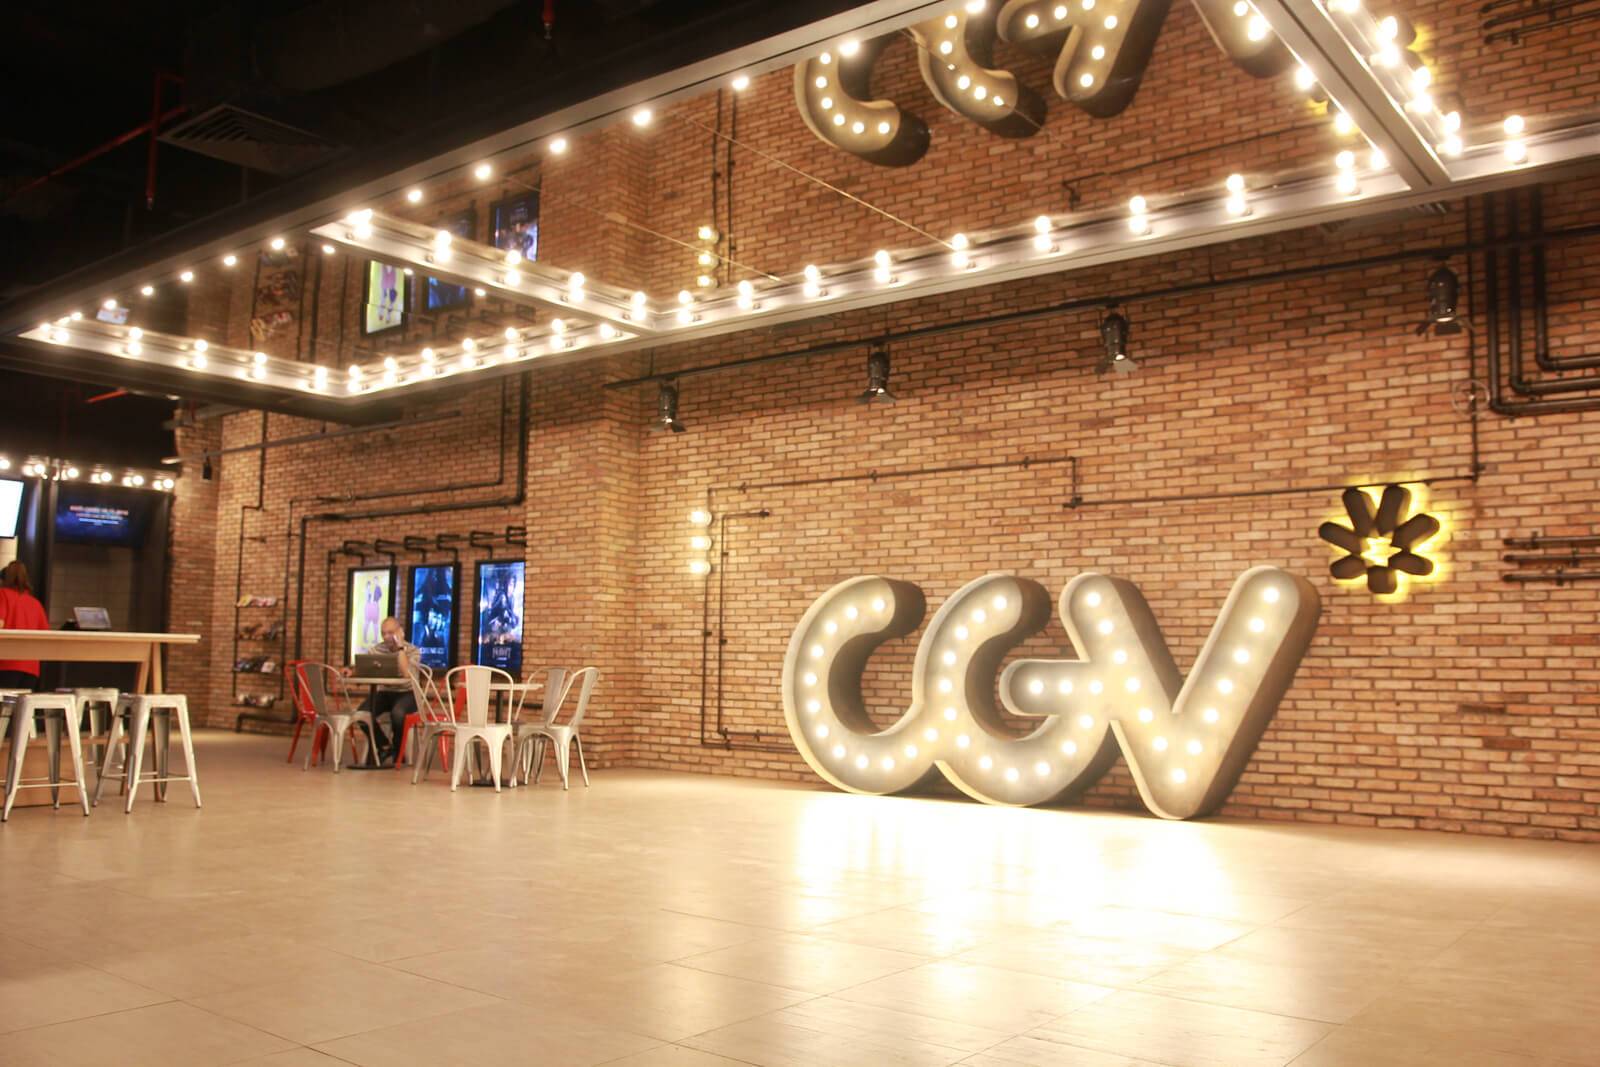 Jobs at CJ CGV Vietnam